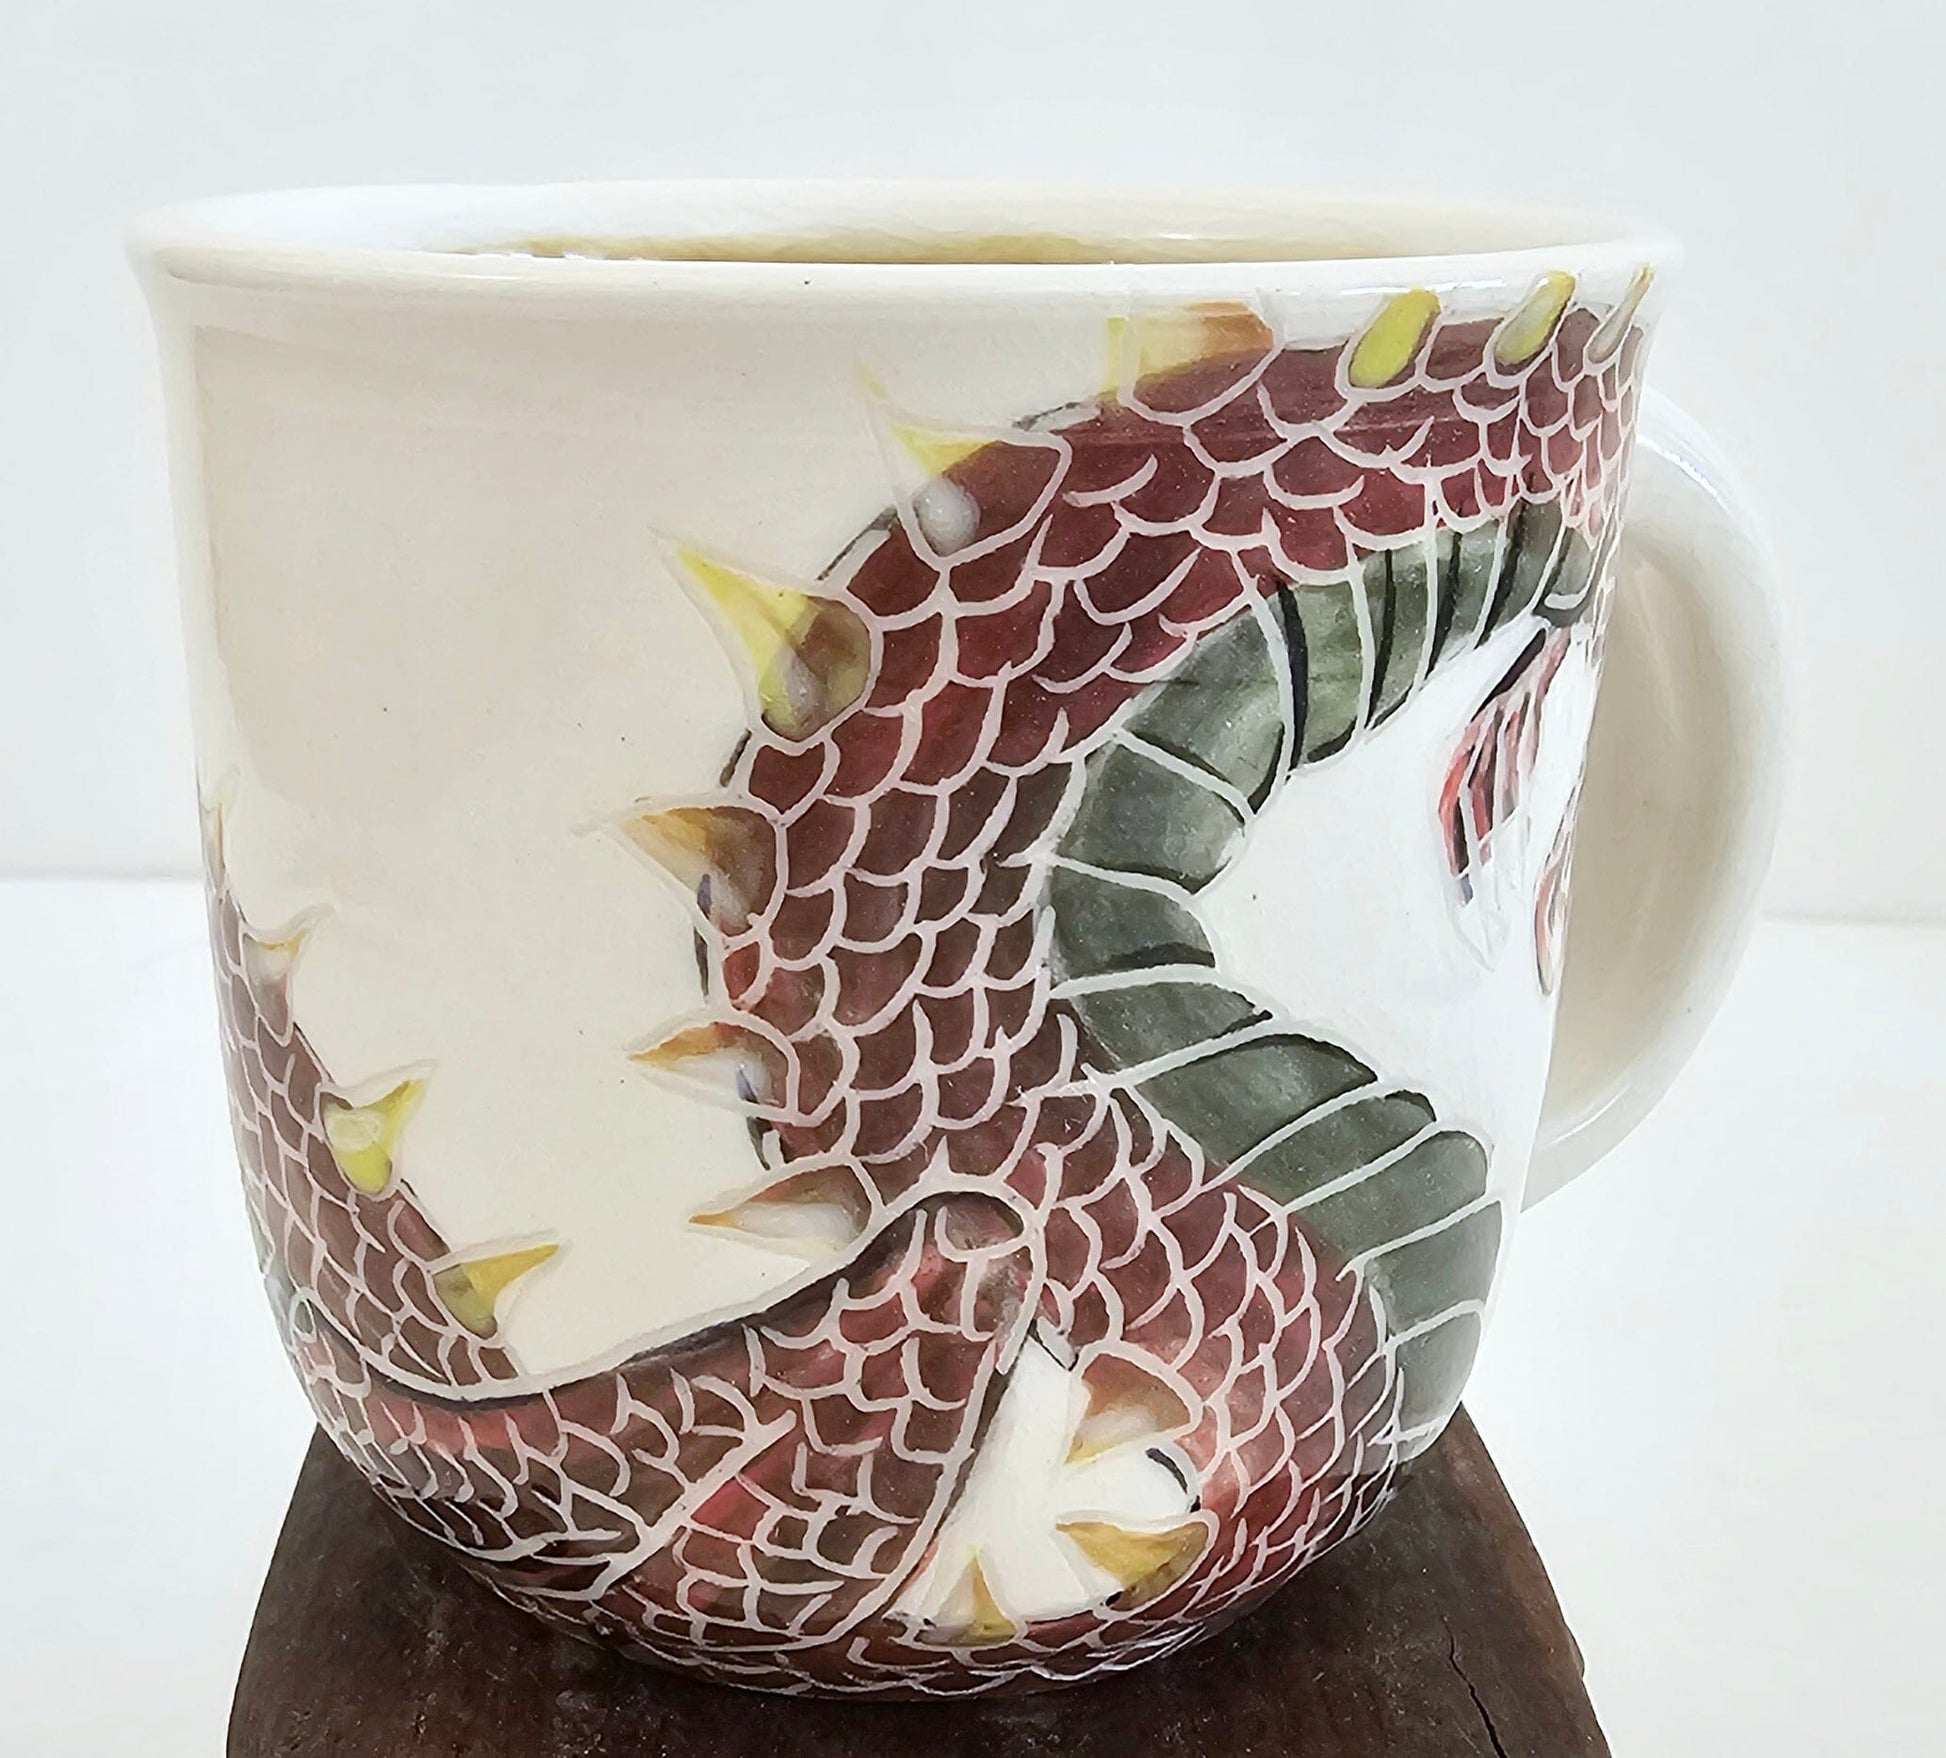 Red Dragon Porcelain Mug: Craftsmanship by Kim and Elizabeth Coffee Mug Elizabeth Schowachert Art